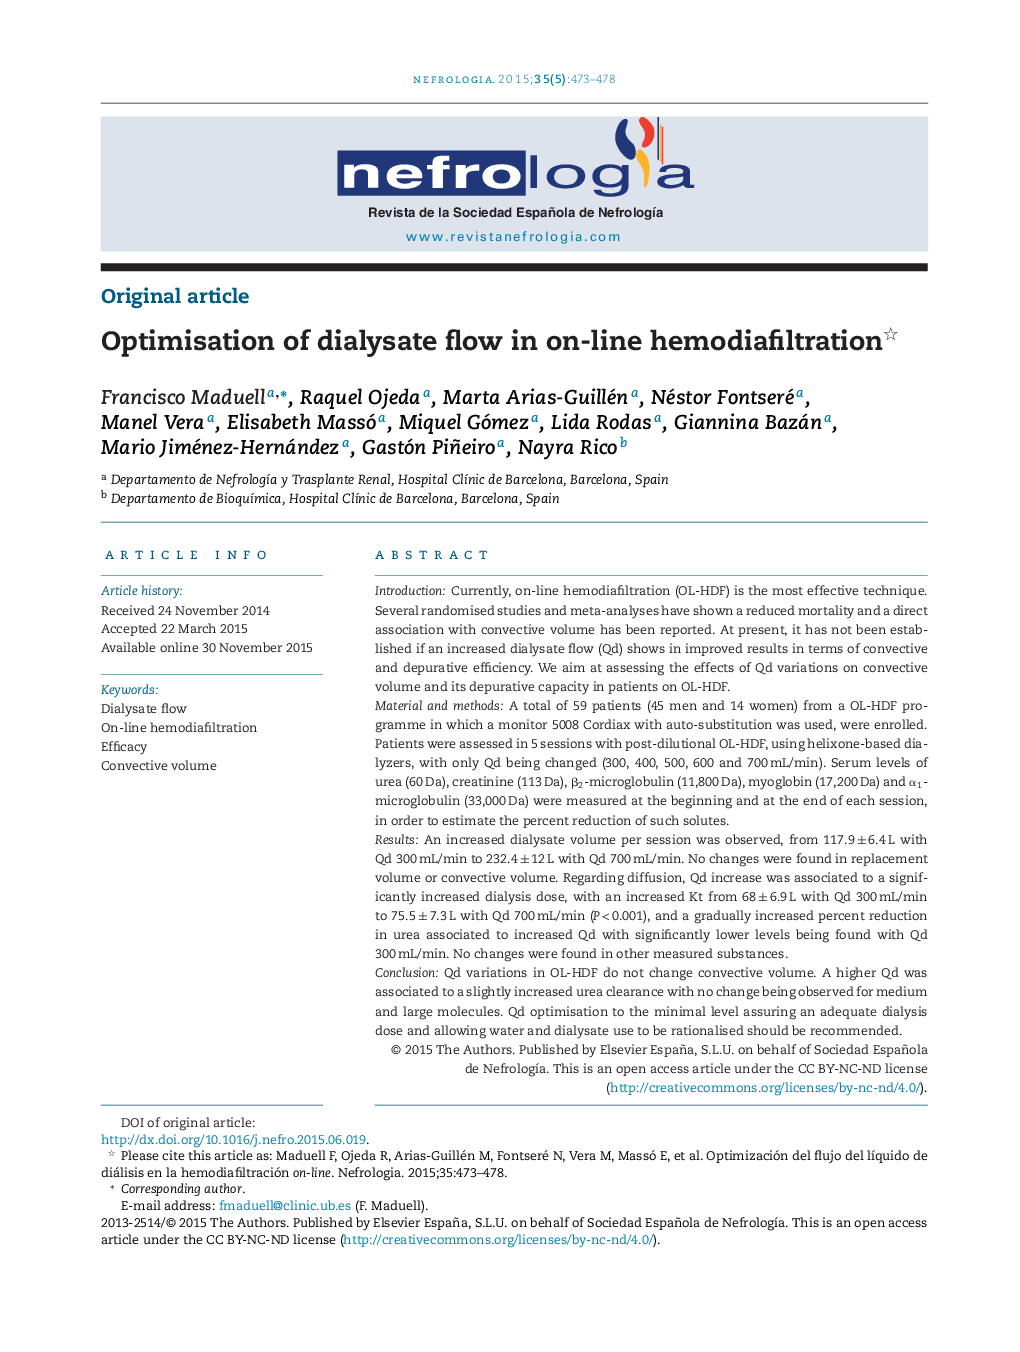 Optimisation of dialysate flow in on-line hemodiafiltration 